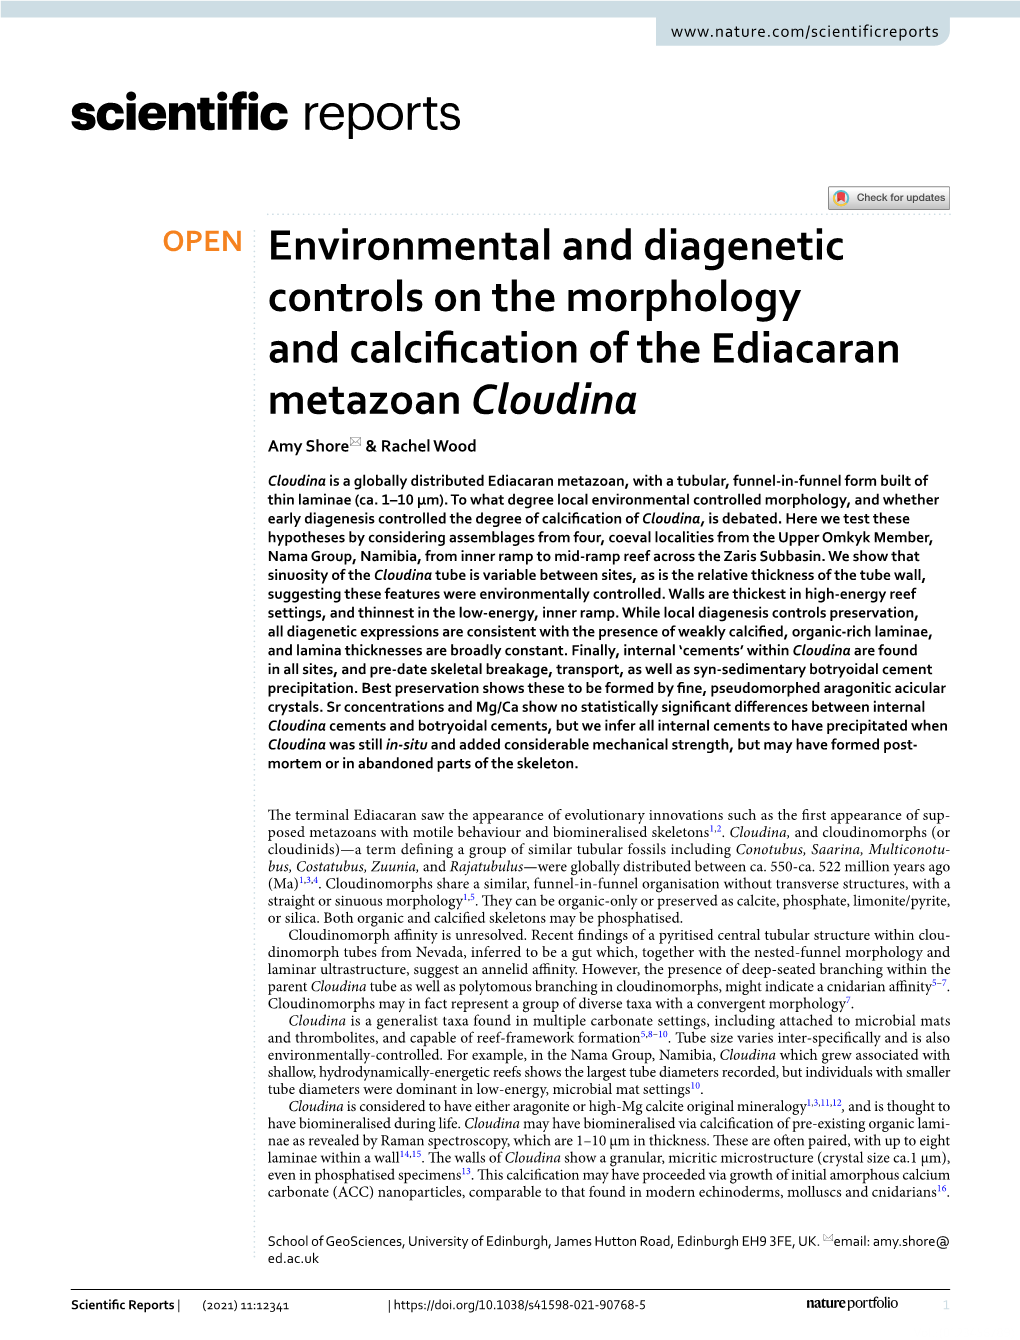 Environmental and Diagenetic Controls on the Morphology and Calcifcation of the Ediacaran Metazoan Cloudina Amy Shore* & Rachel Wood